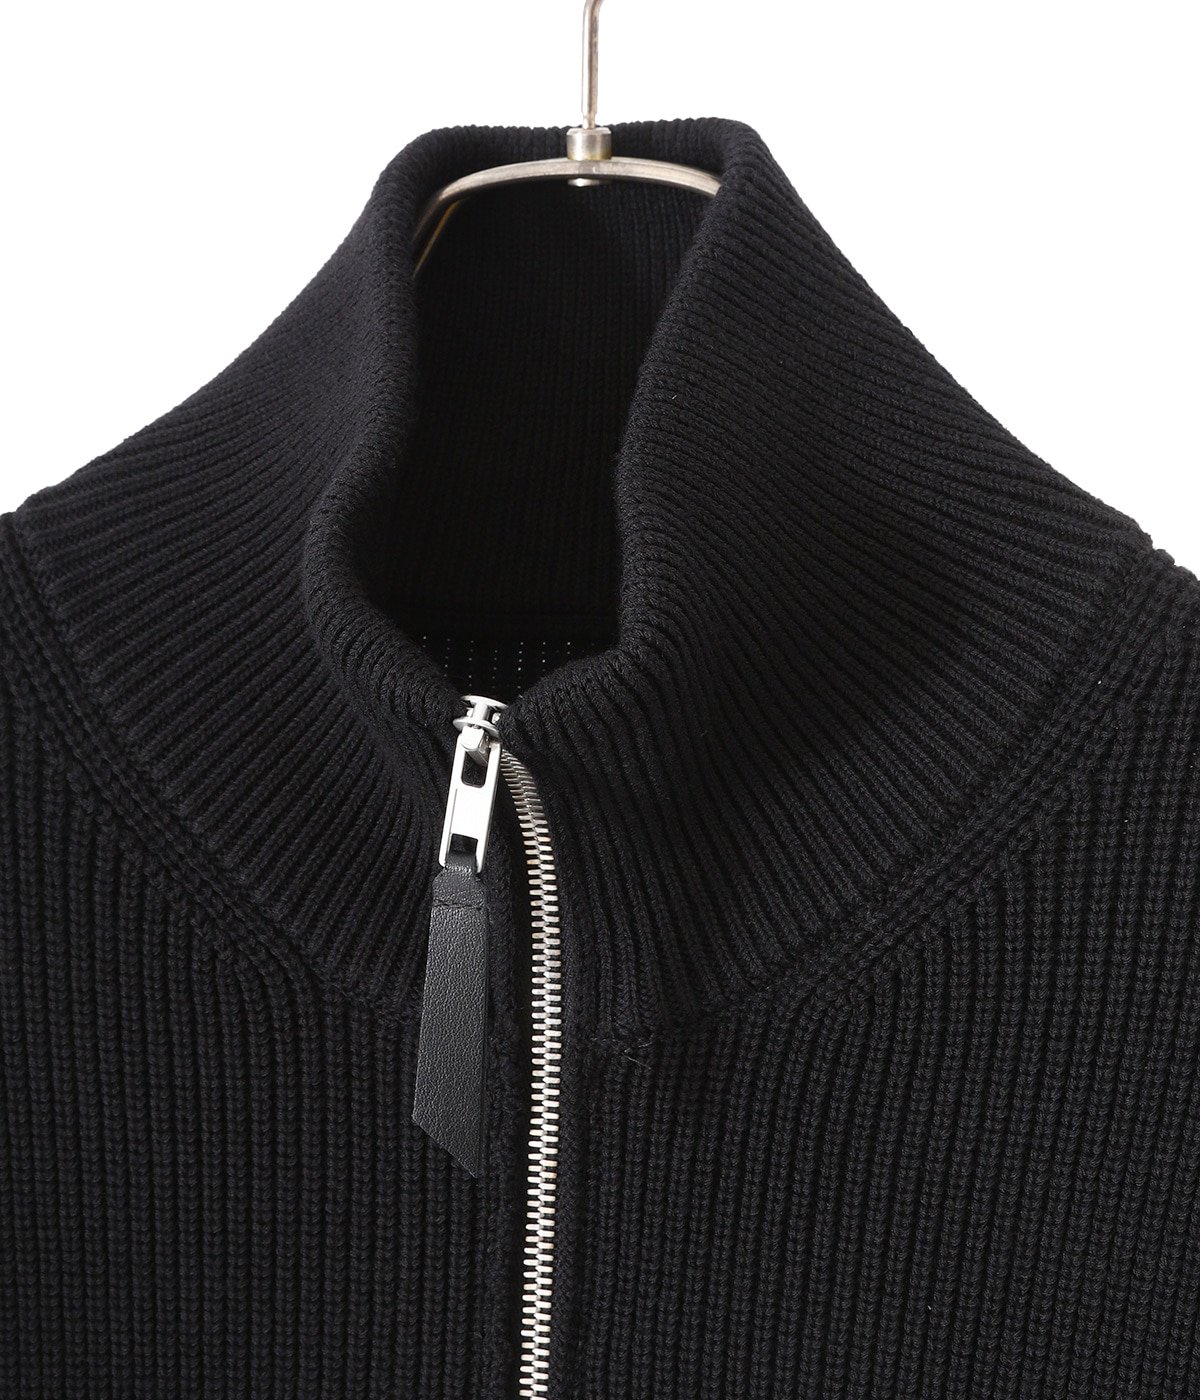 Drivers Knit | Maison Margiela(メゾン マルジェラ) / トップス ニット・セーター (メンズ)の通販